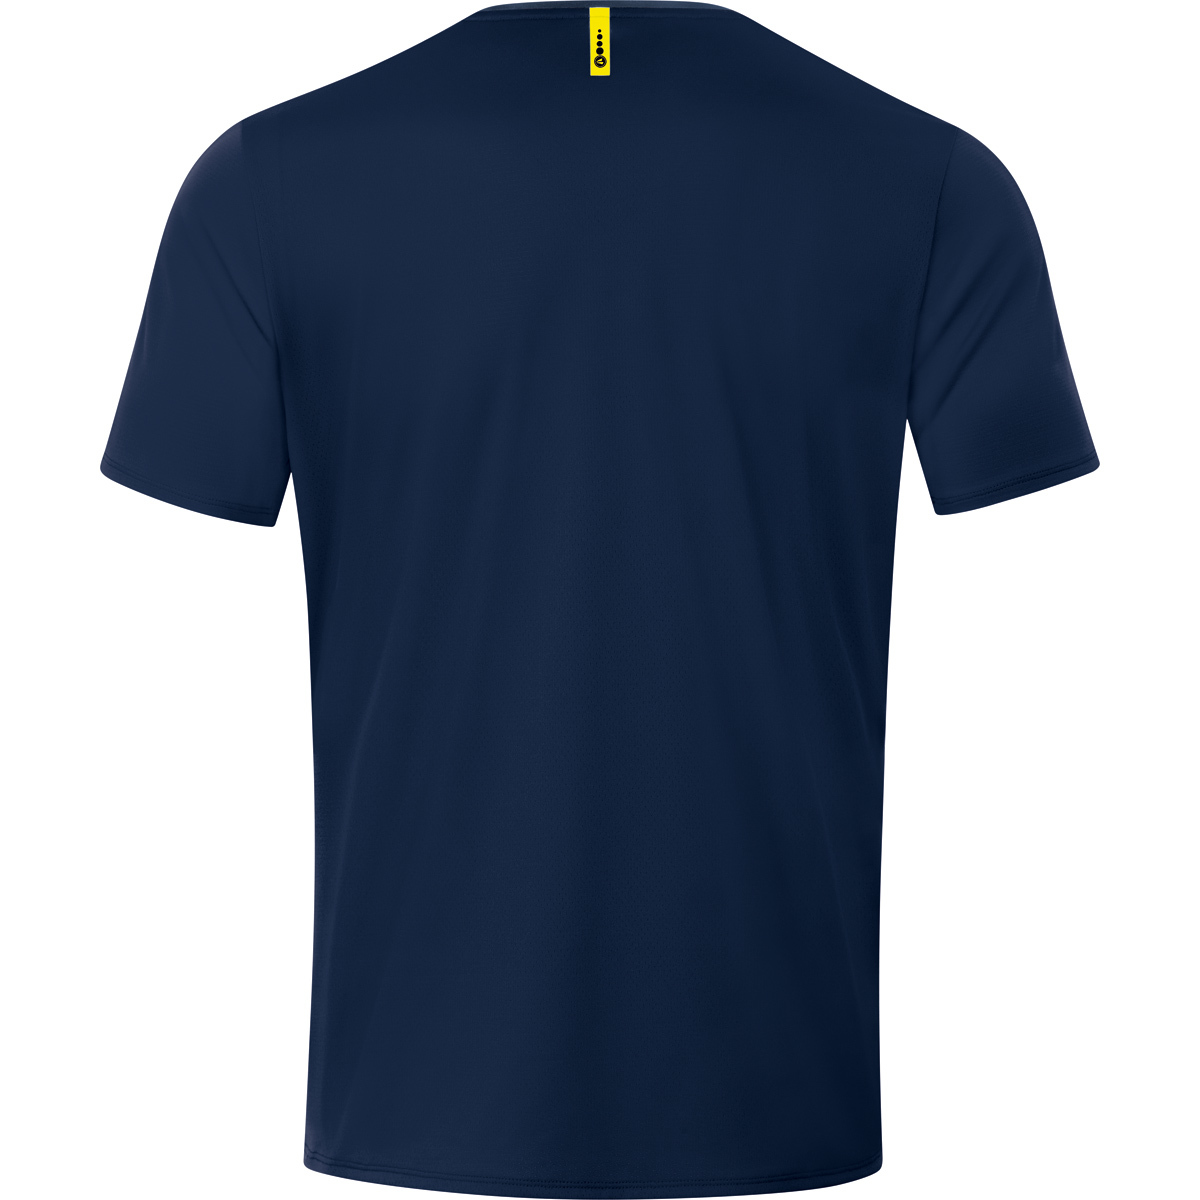 T-Shirt Herren, 2.0 6120 Champ Gr. marine/darkblue/neongelb, JAKO S,